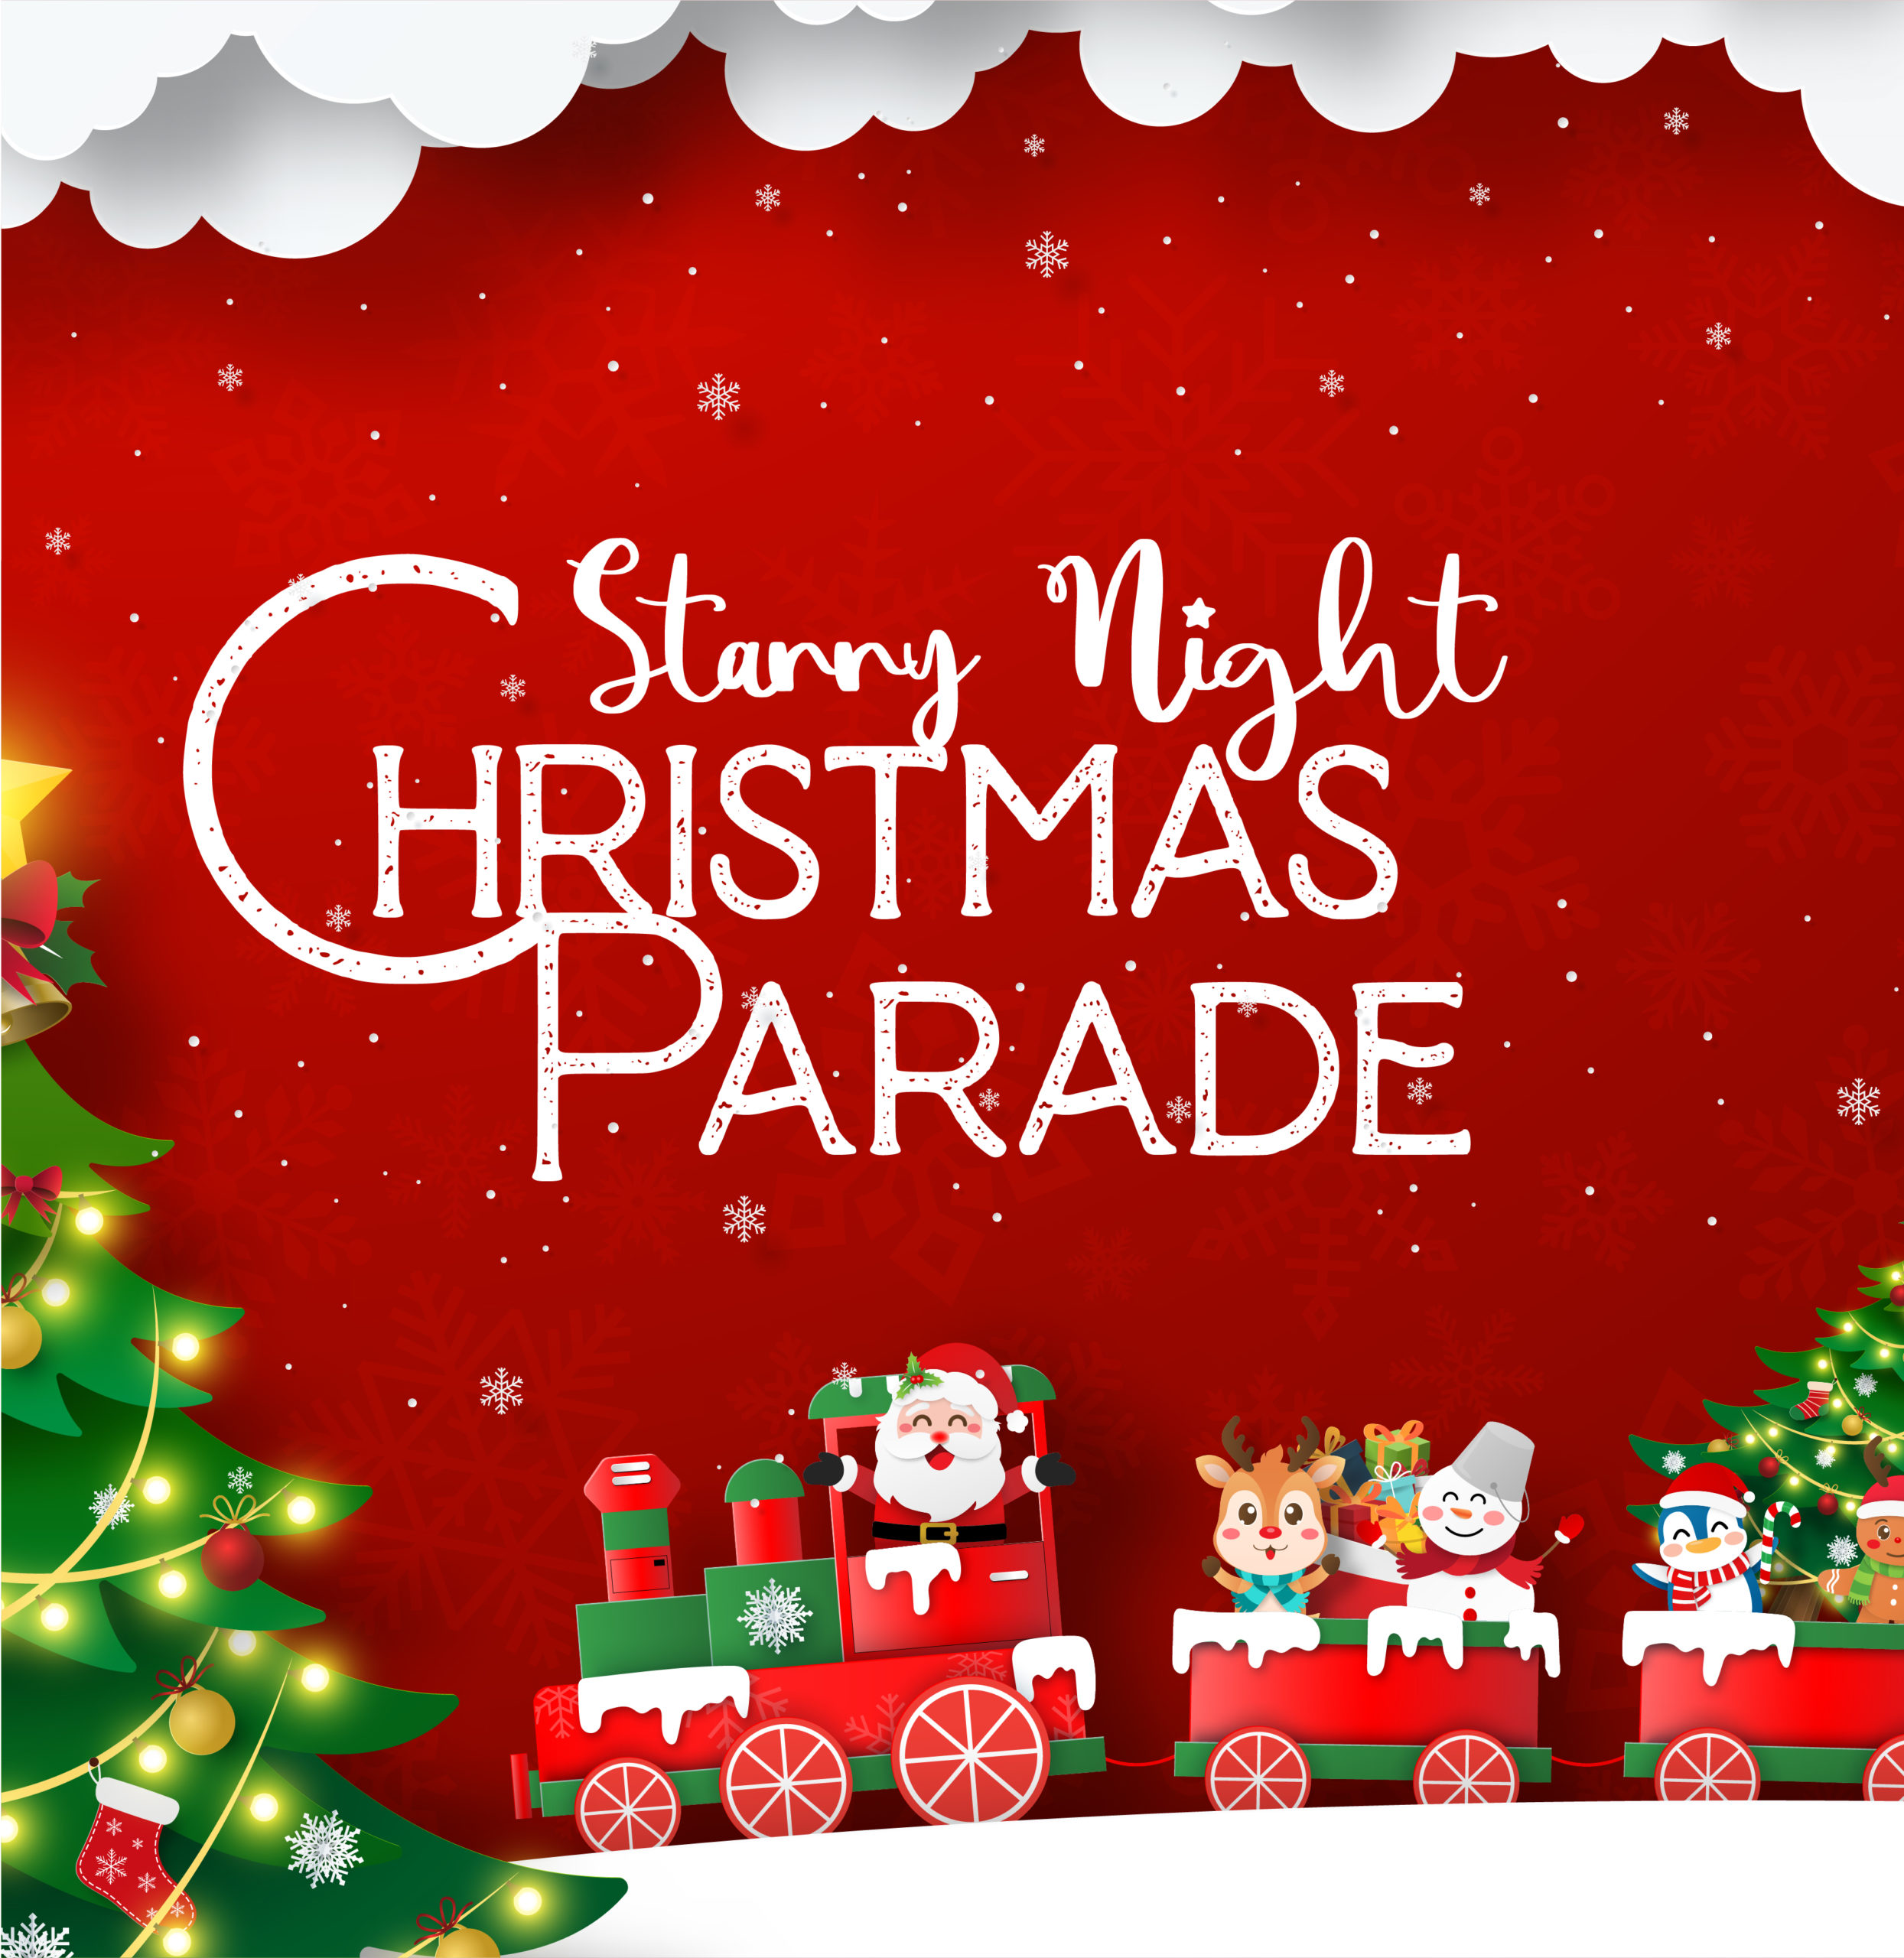 Christmas Parade applications are live!!!